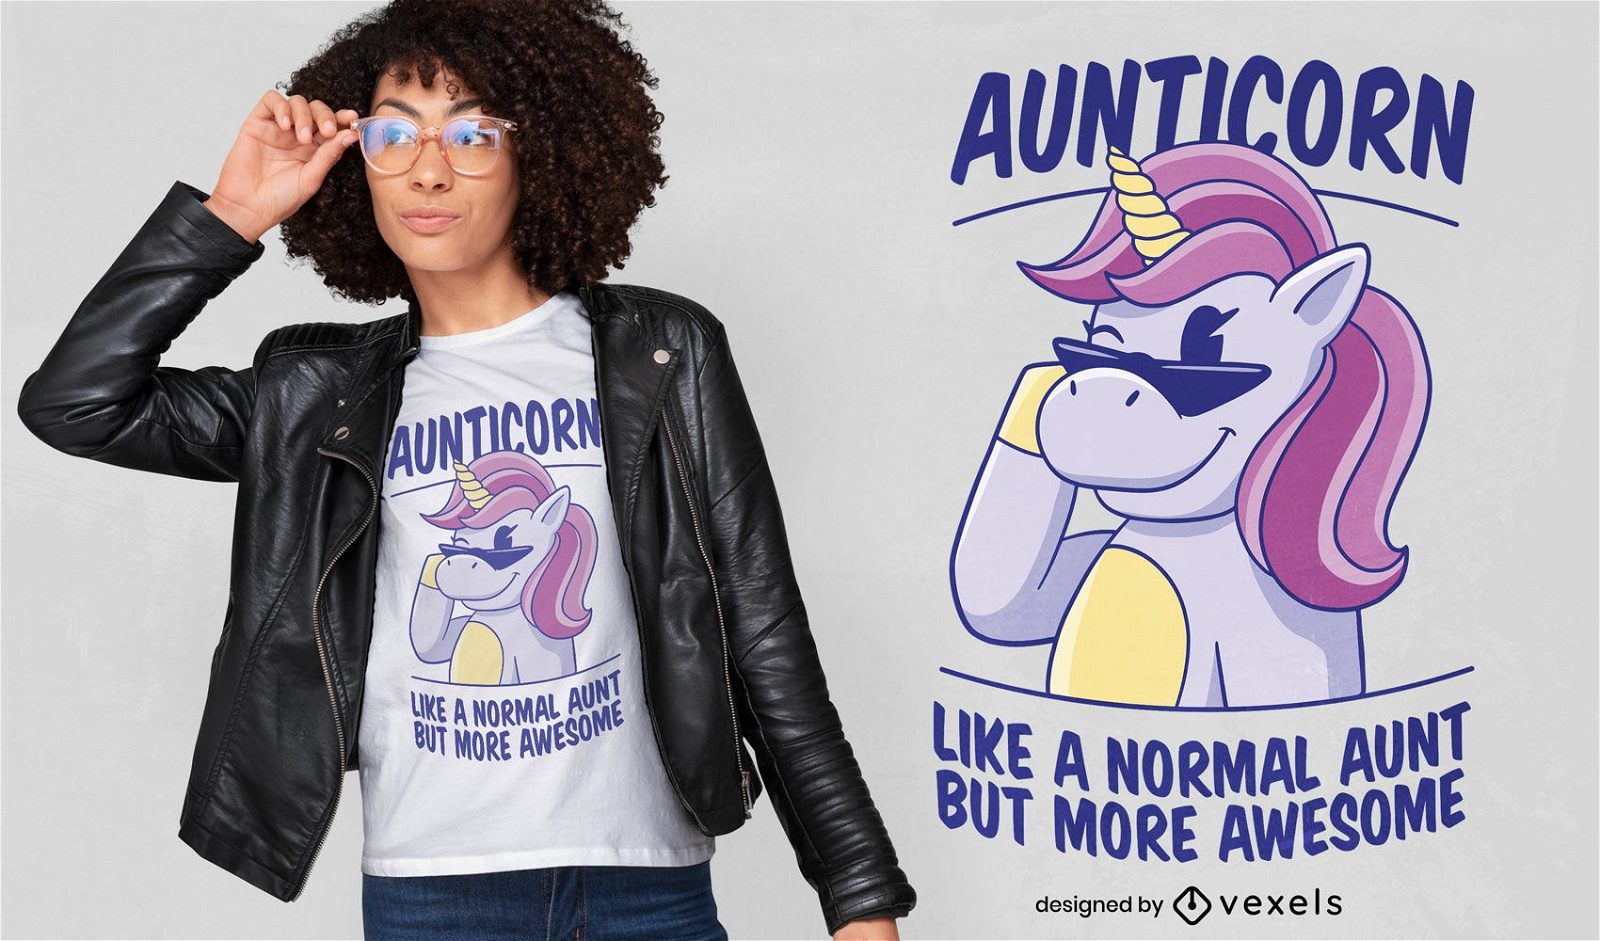 Cute unicorn aunt t-shirt design